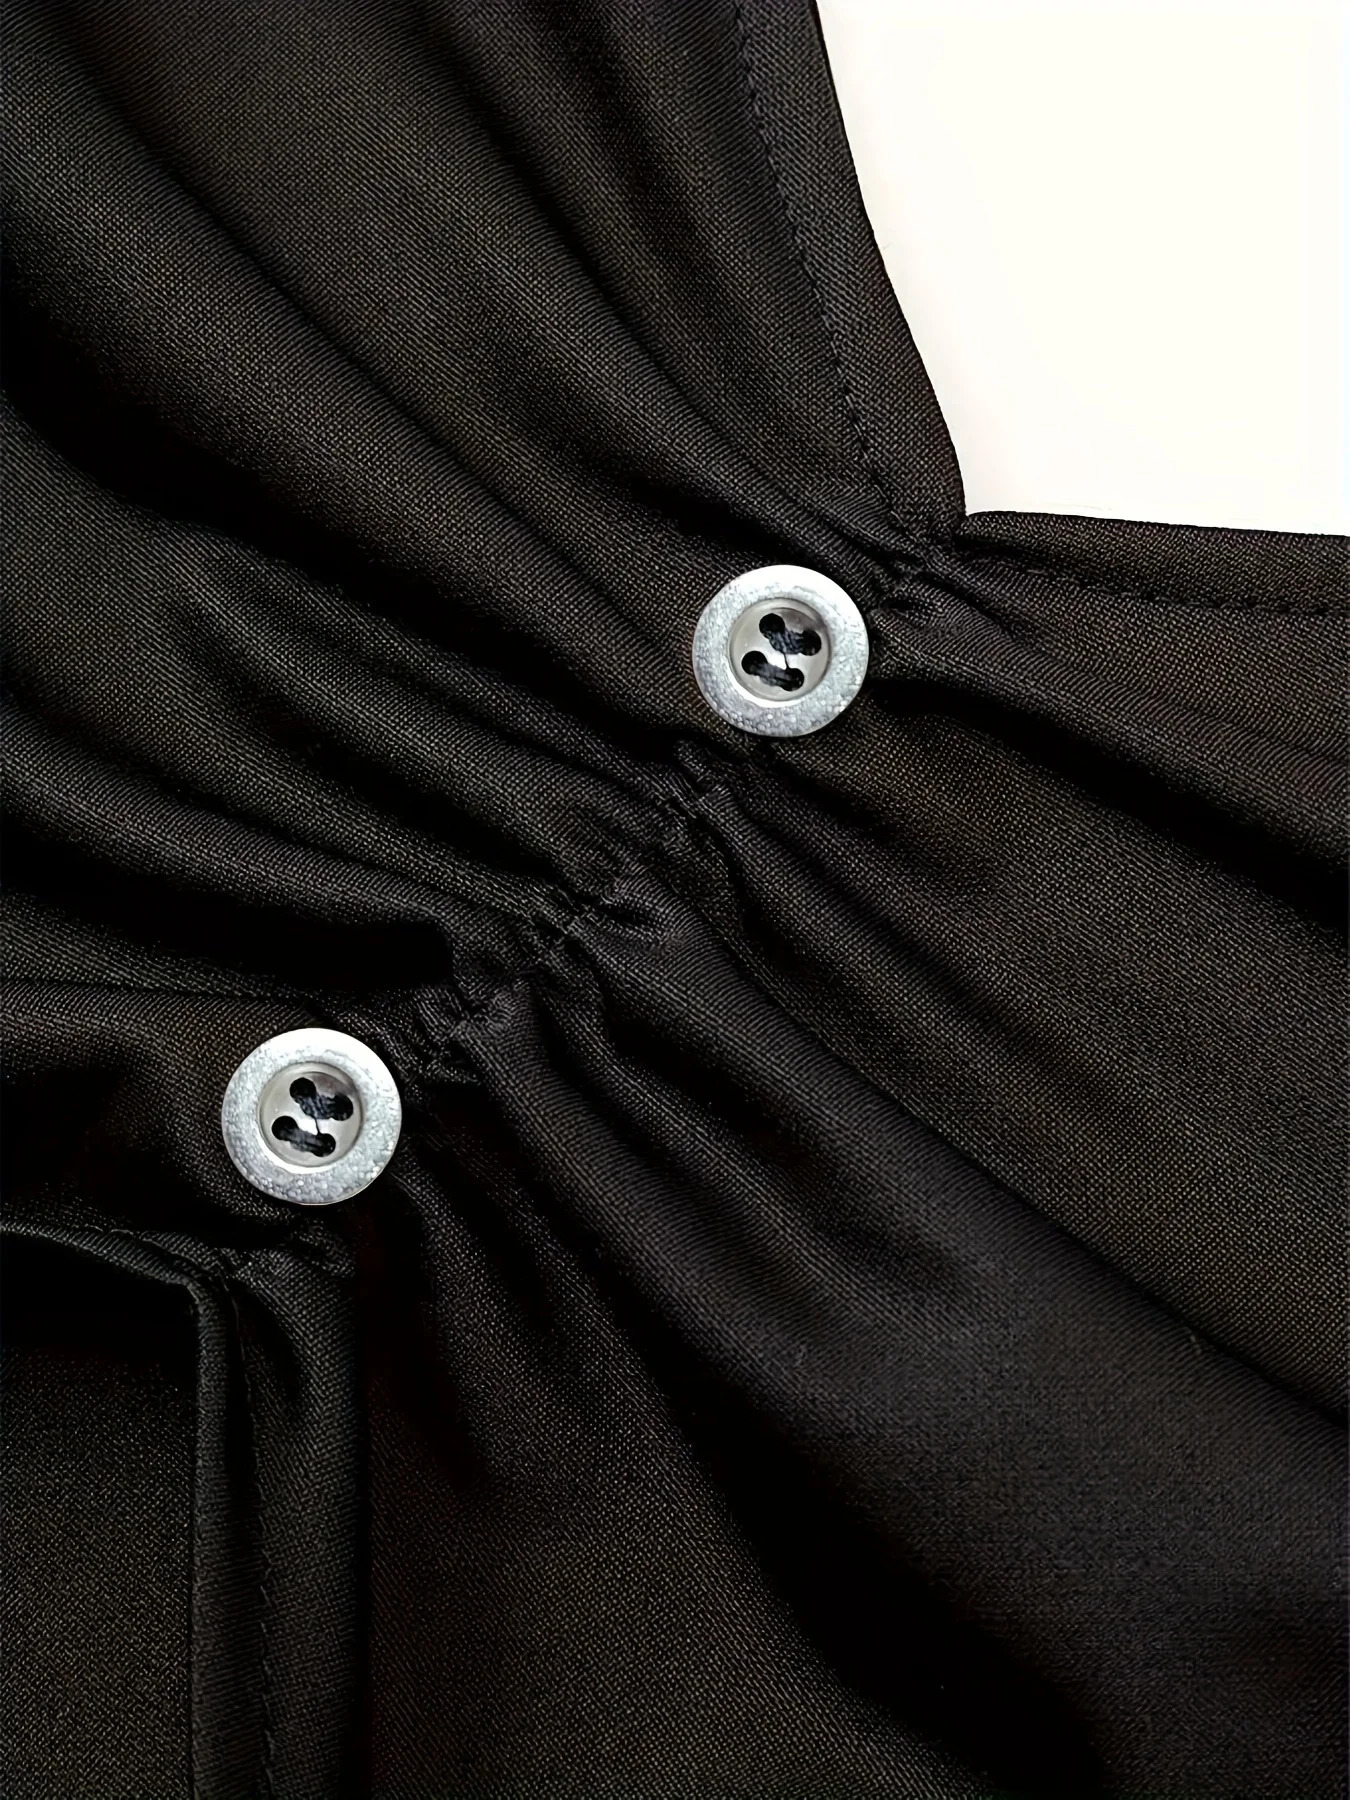 Plus Size Autumn Casual Dress Womens Moon Sun Print Contrast Mesh Button Decor V Neck Layered Sexig Black Dress 240322